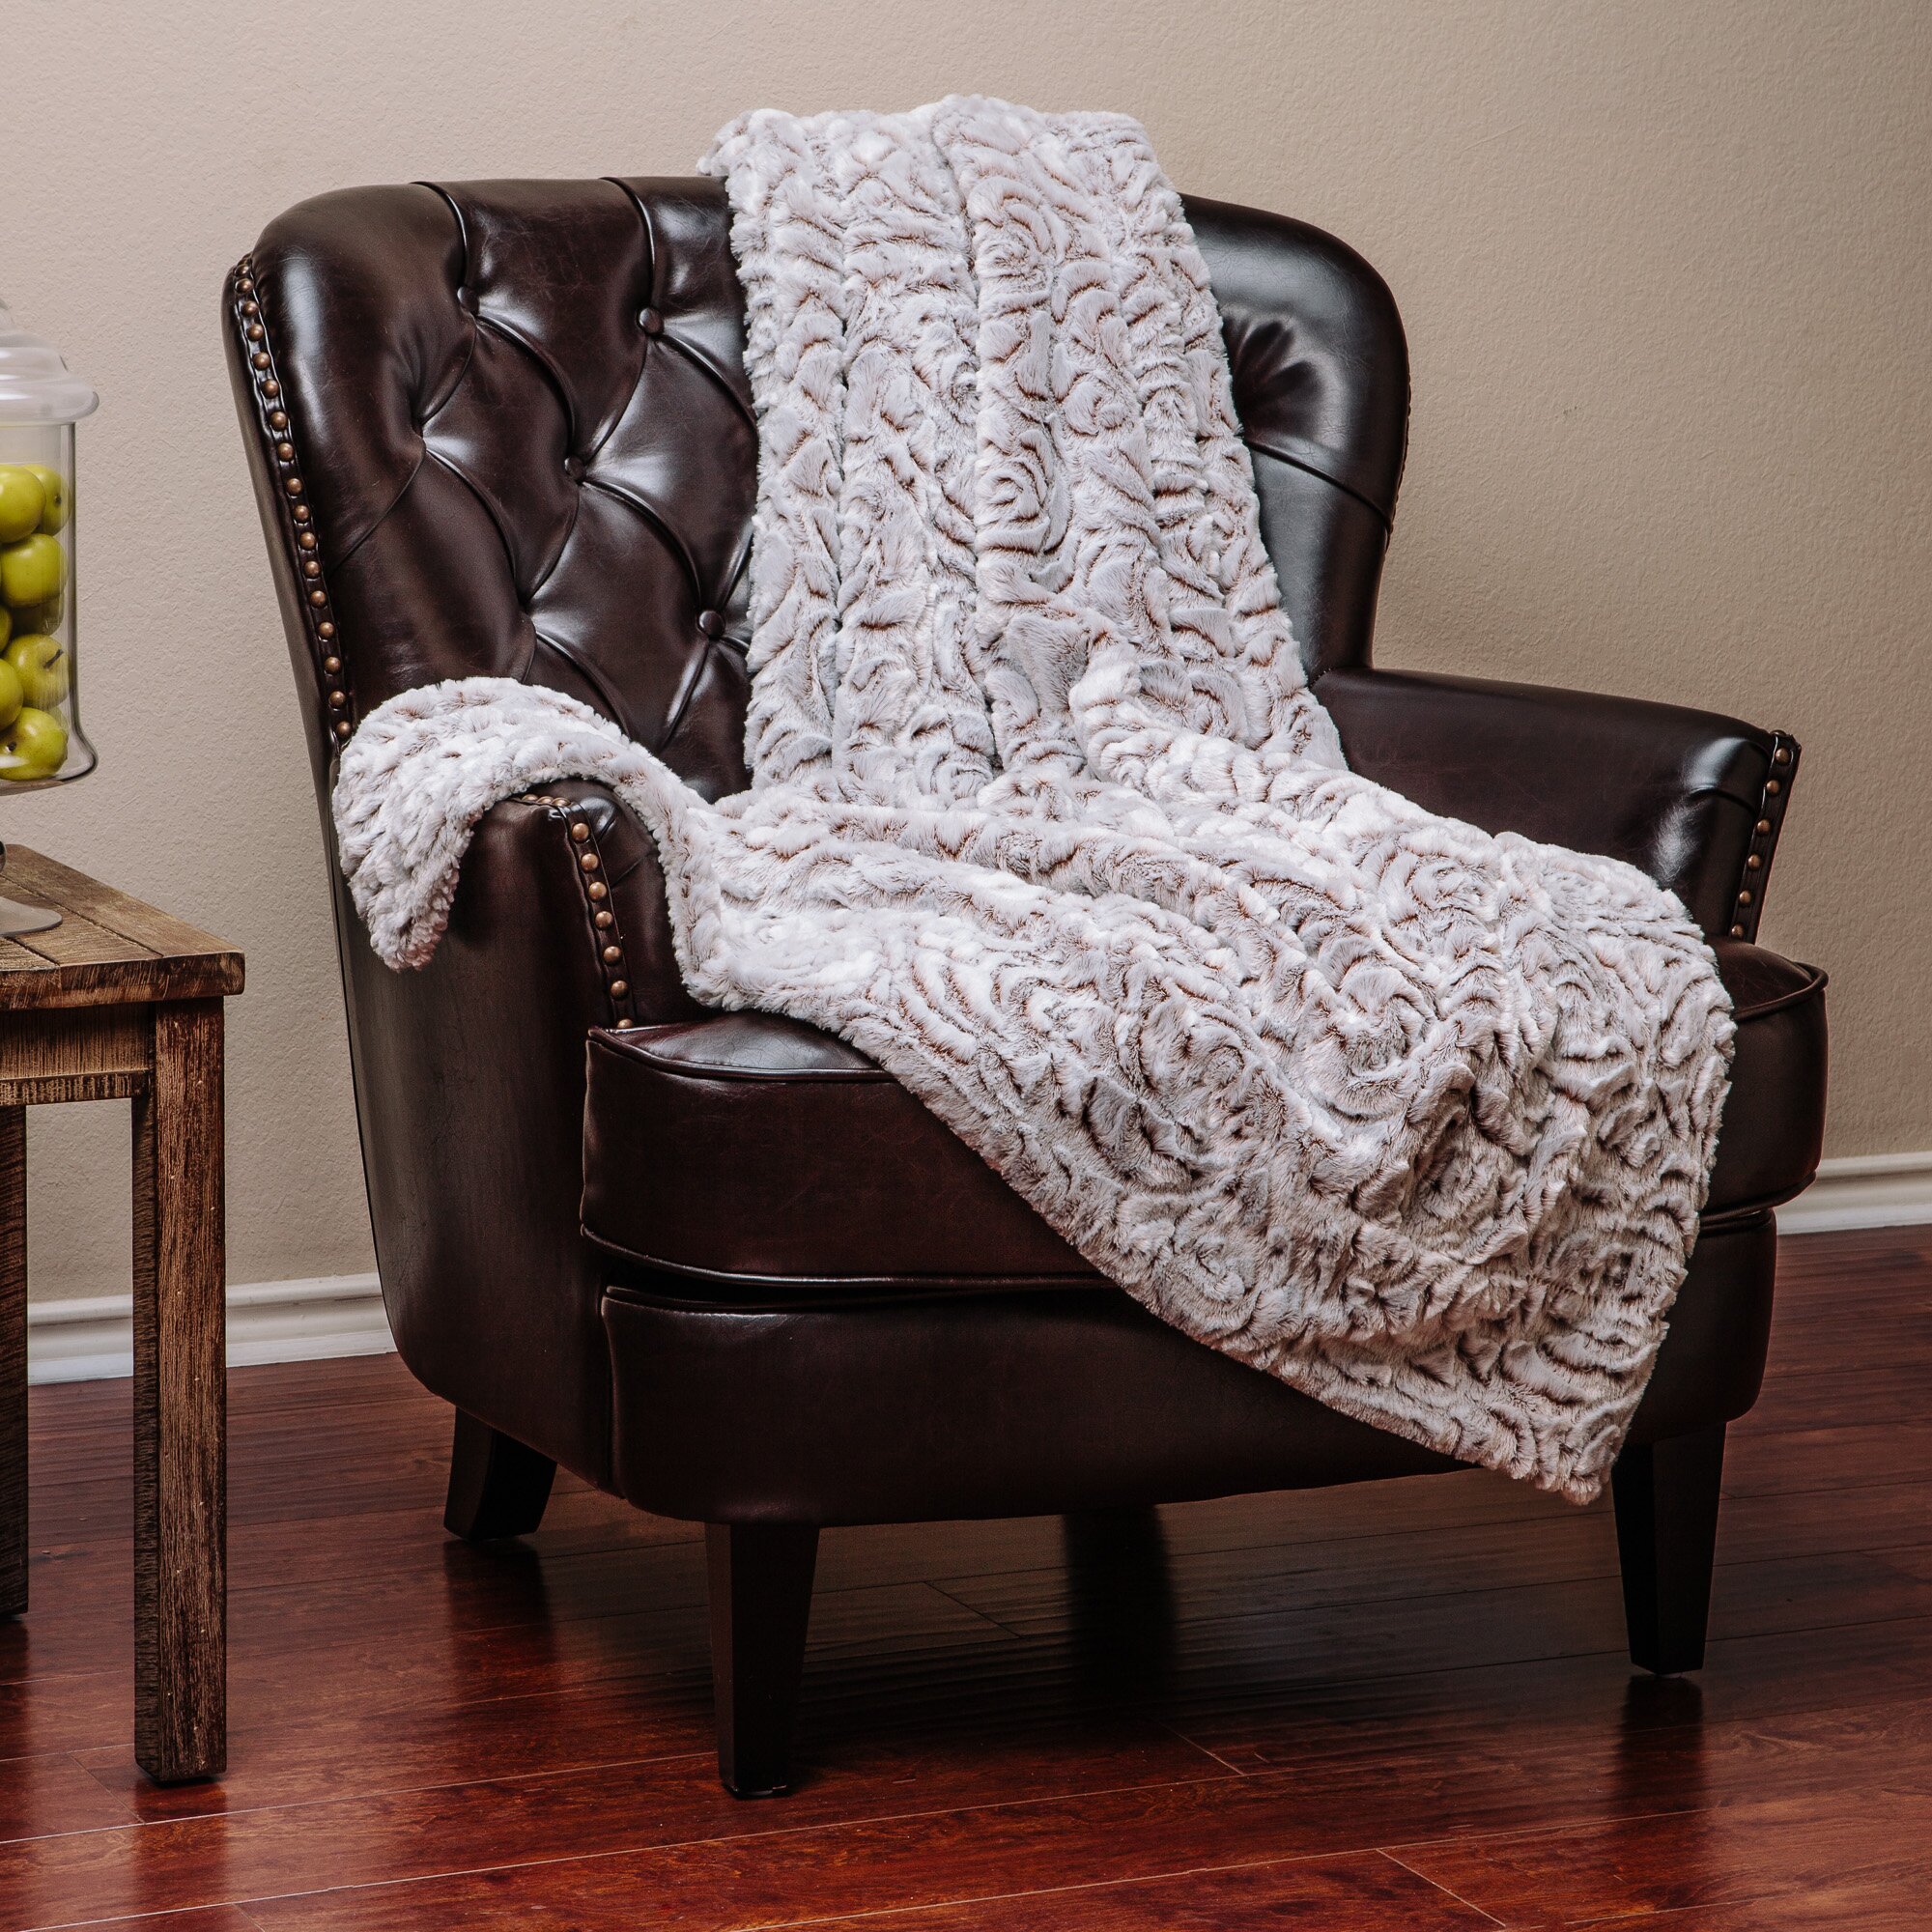 Threshold Fuzzy Throw Blanket - Grey for sale online | eBay